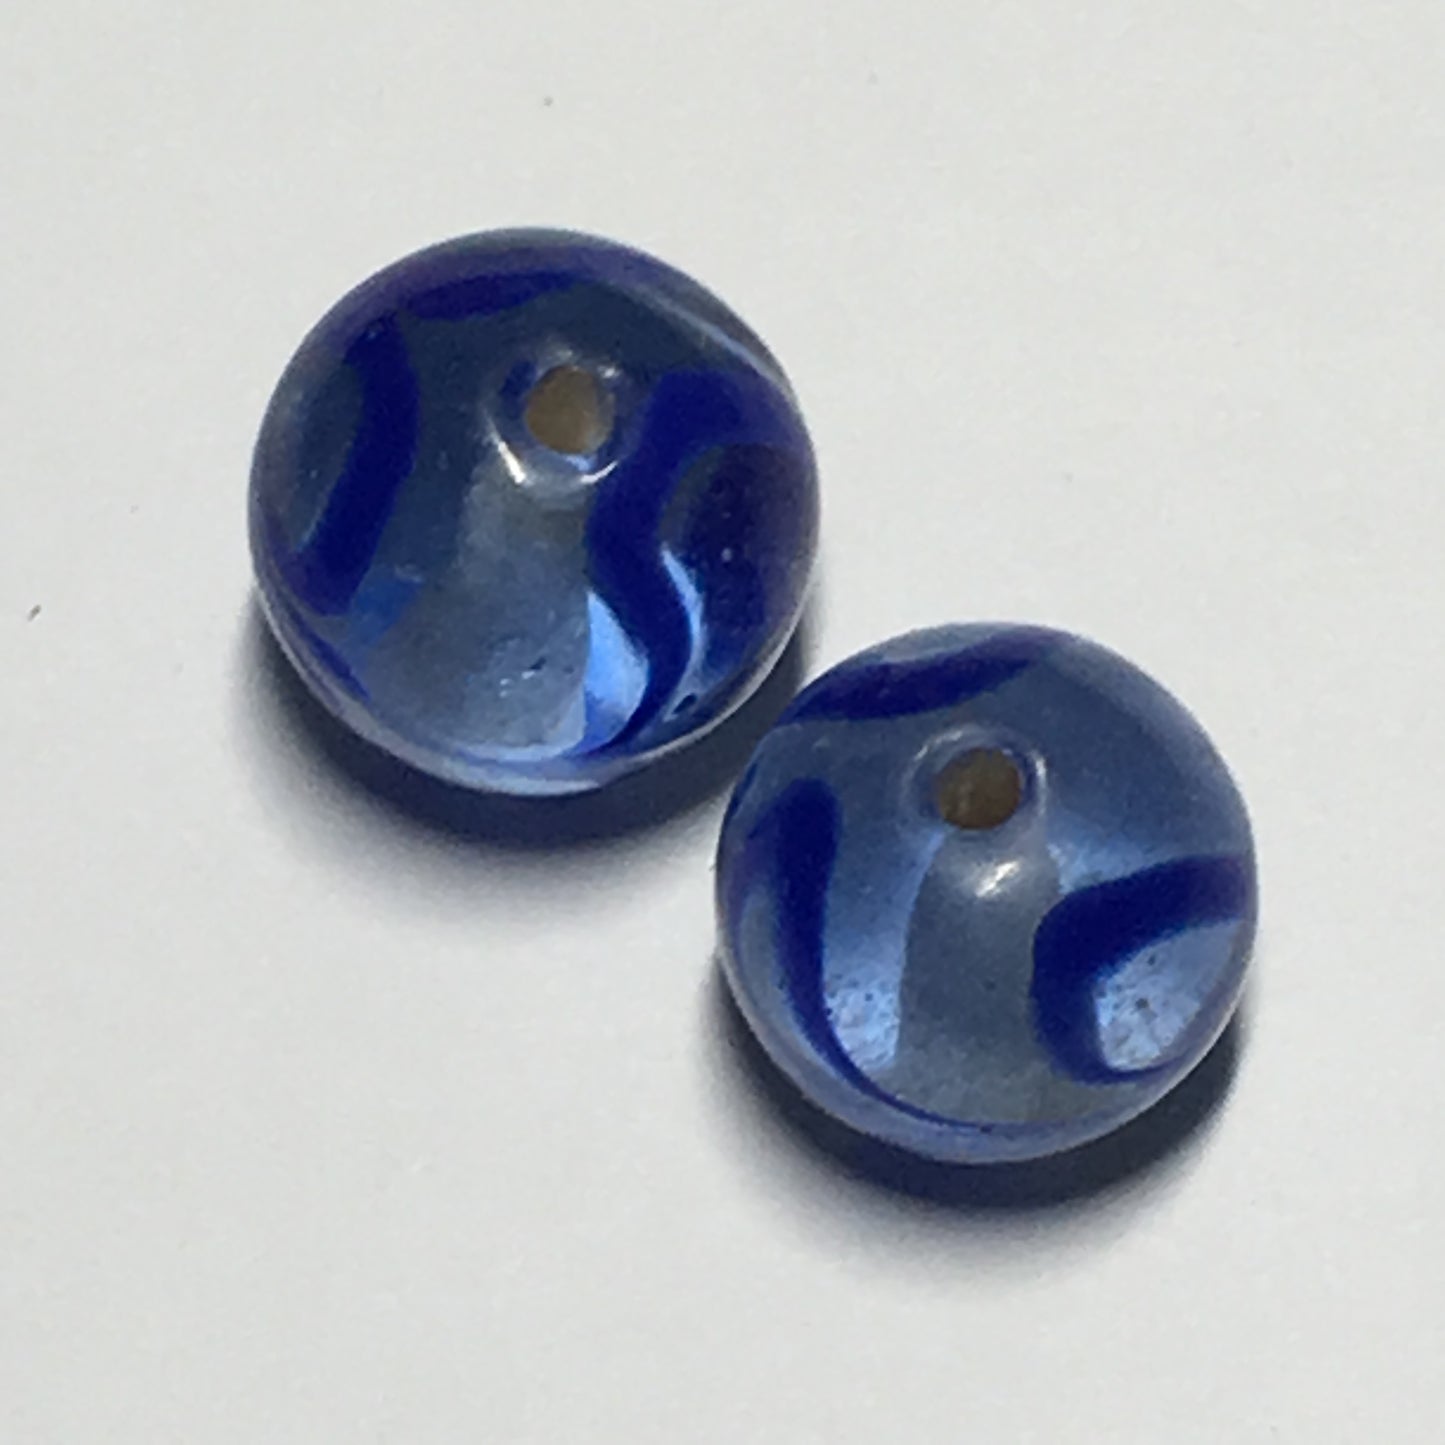 Transparent Blue Glass with Dark Blue Swirl Round Glass Lampwork Beads, 10 mm, 2 Beads